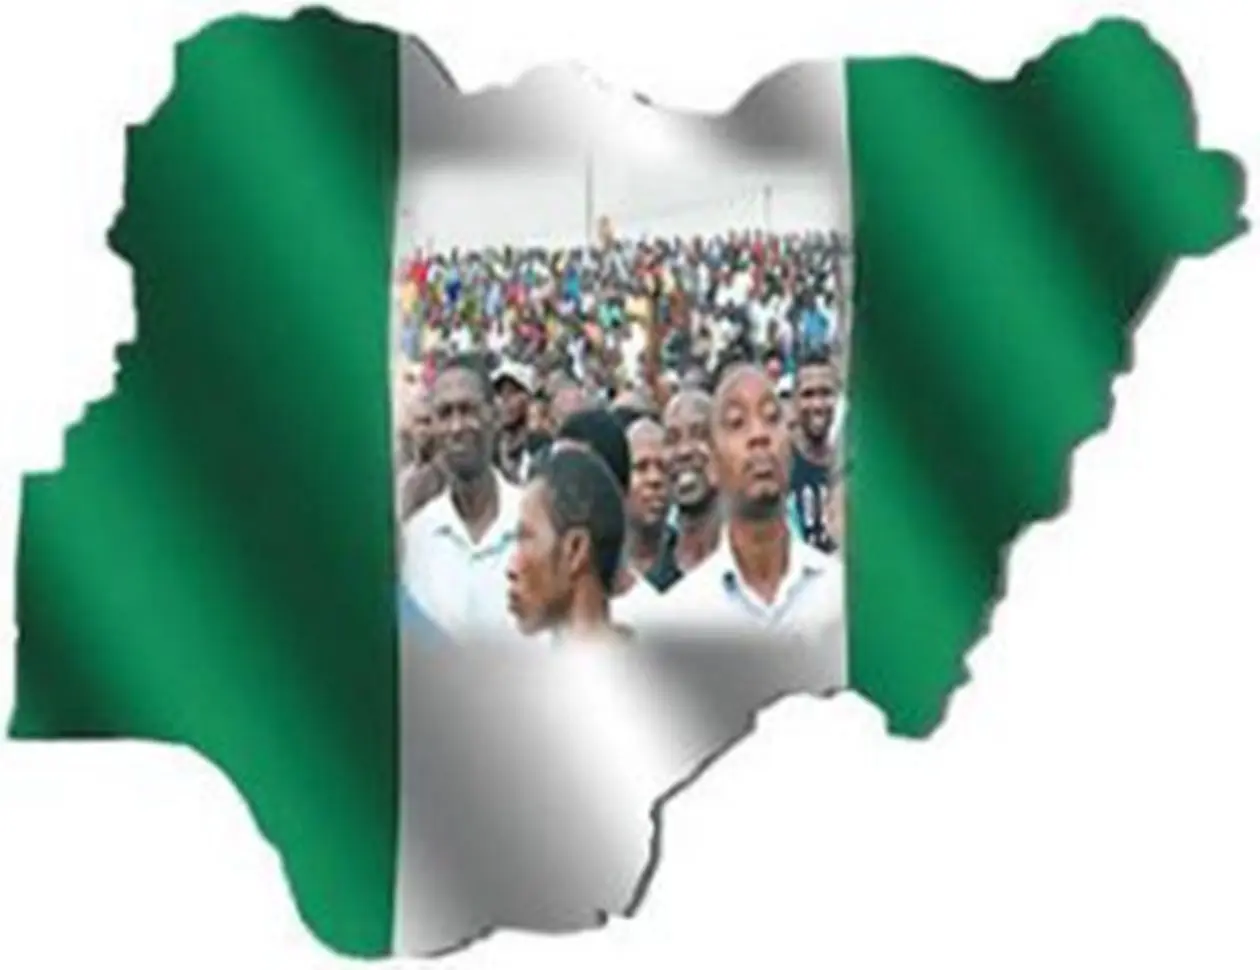 Minister says Nigeria’s democracy undergoing youth revolution